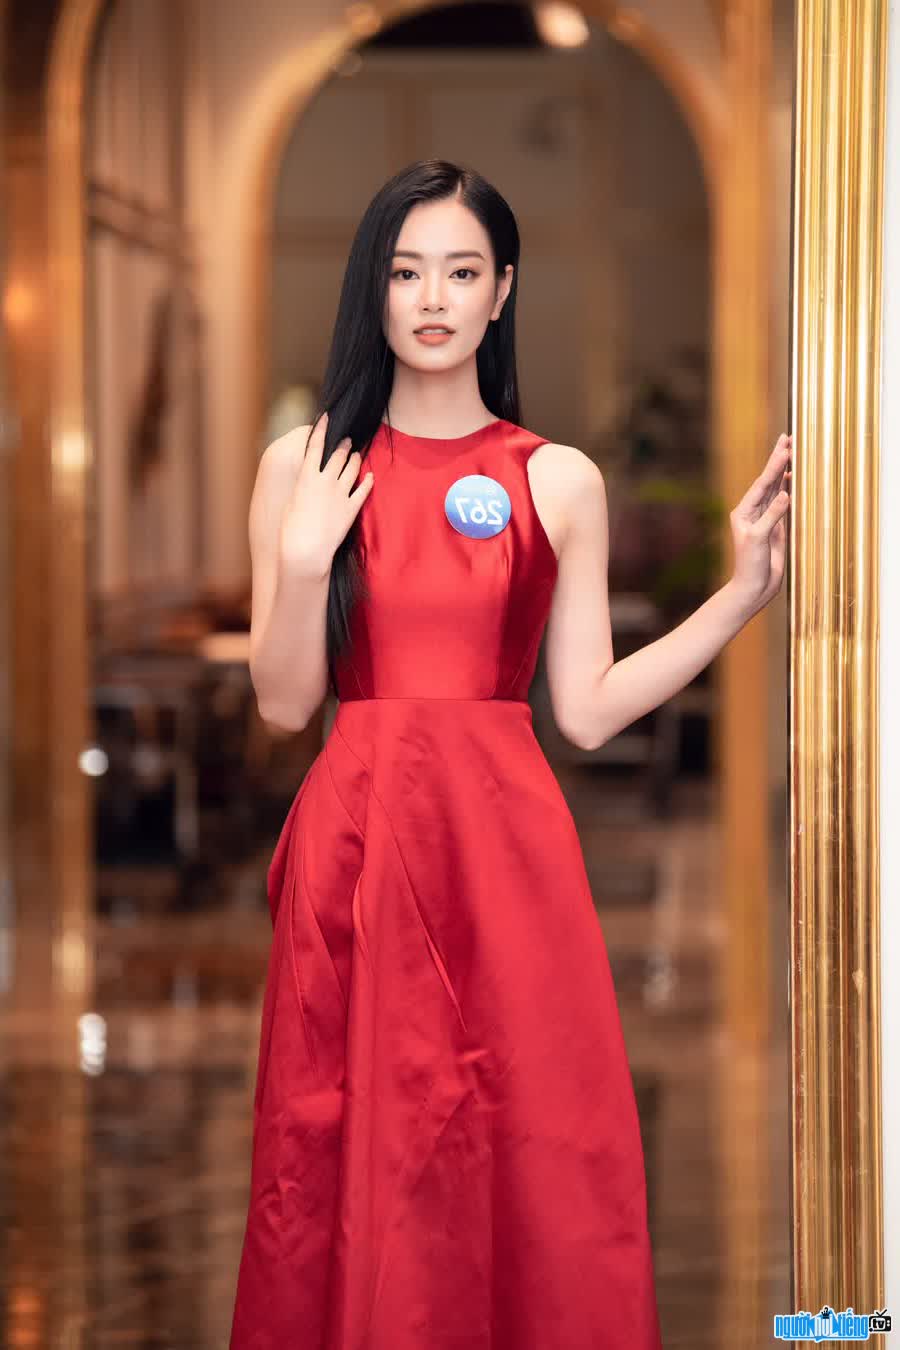 Bui Khanh Linh is the beauty of Miss World Vietnam 2022